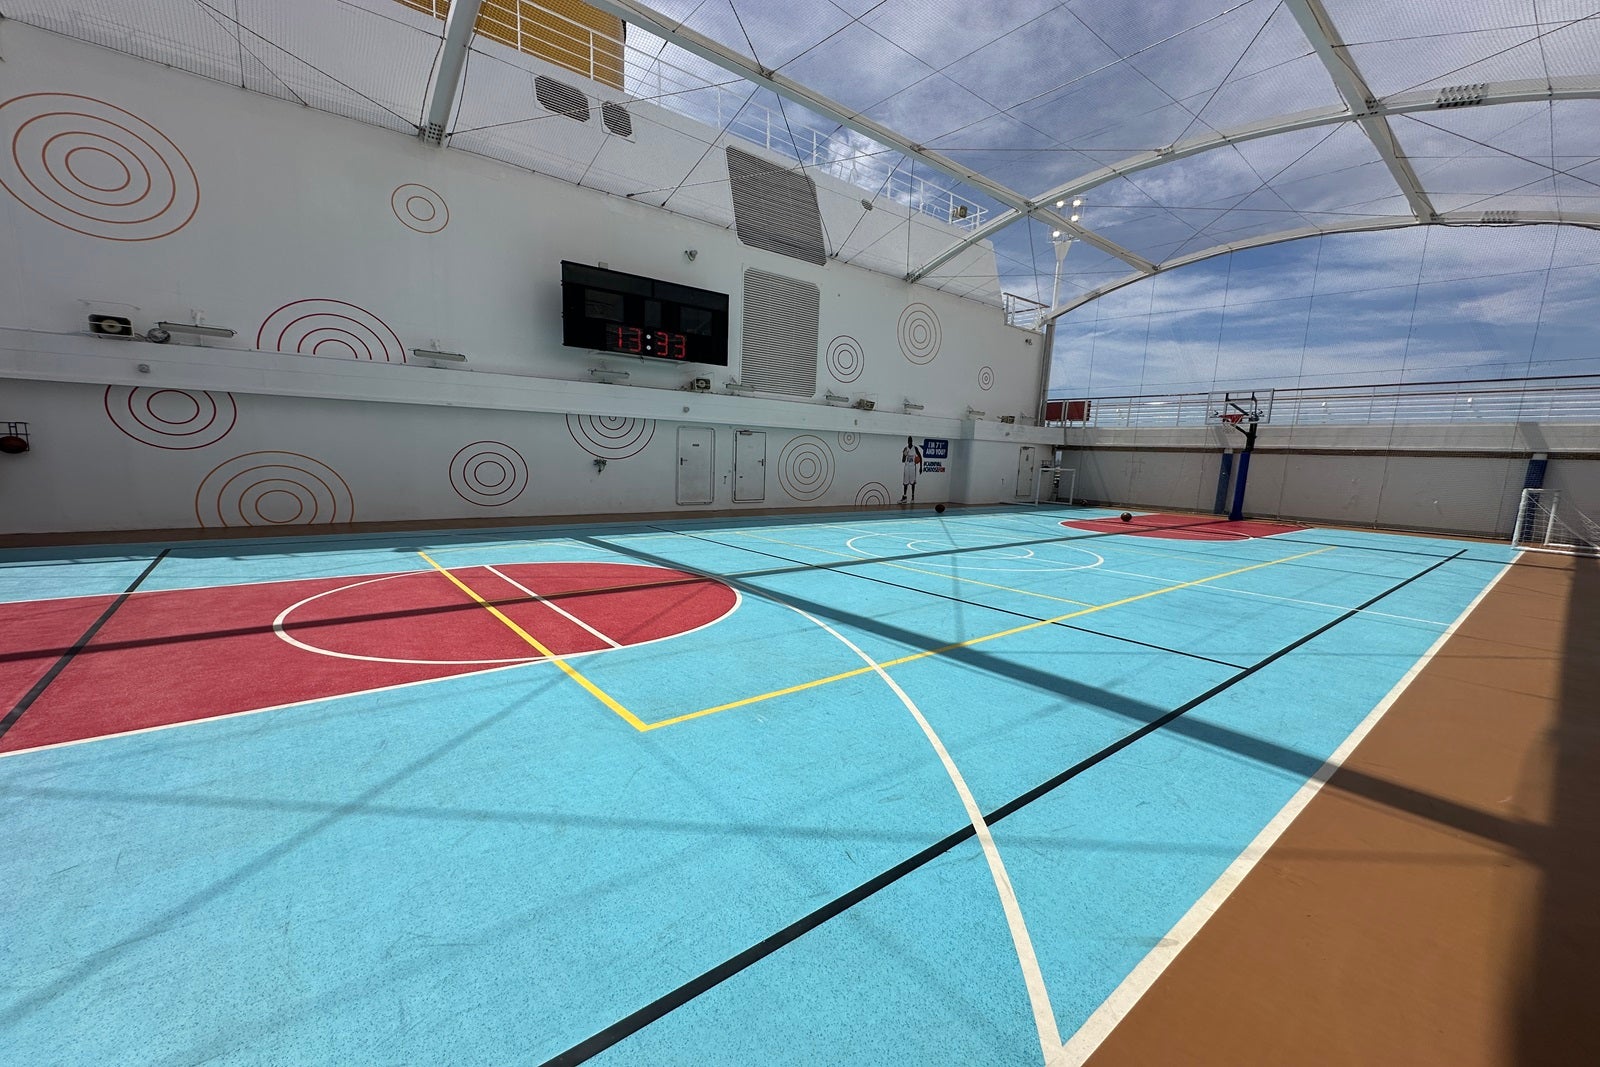 An empty cruise ship basketball court